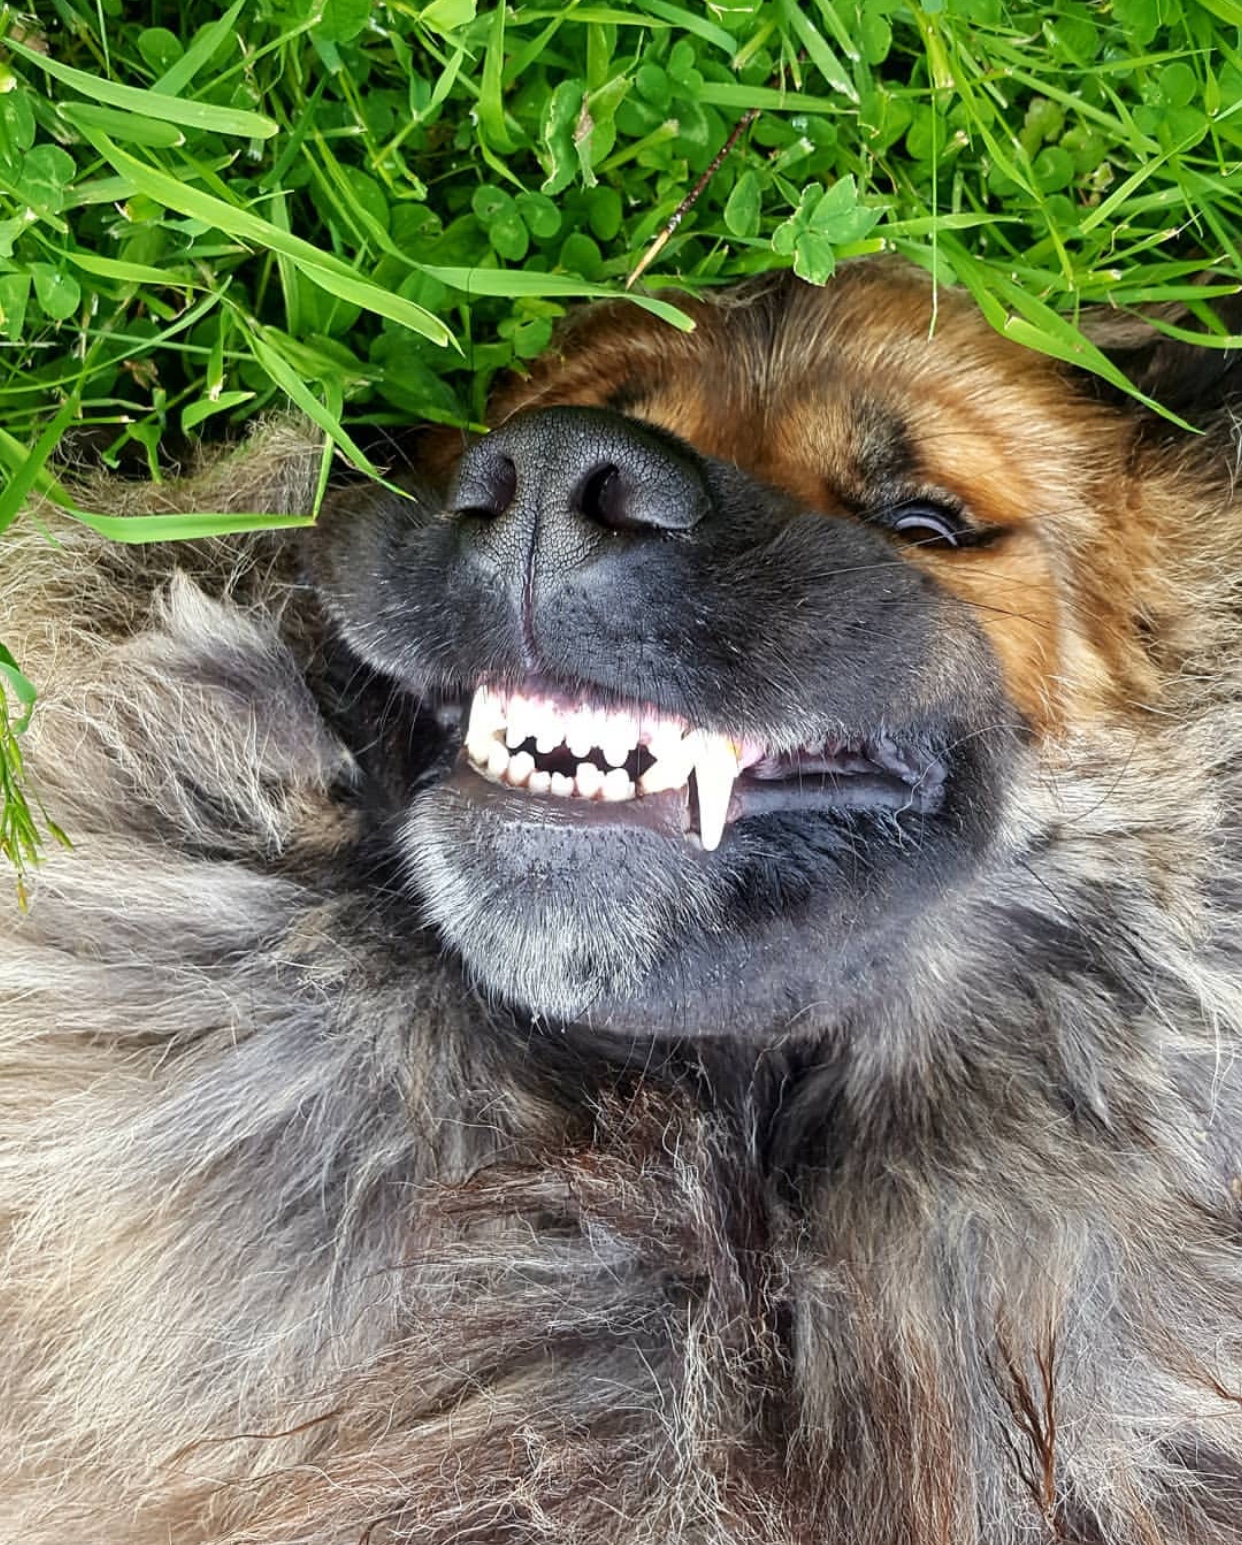 Tibetan Mastiff dog smiling while lying on the green grass